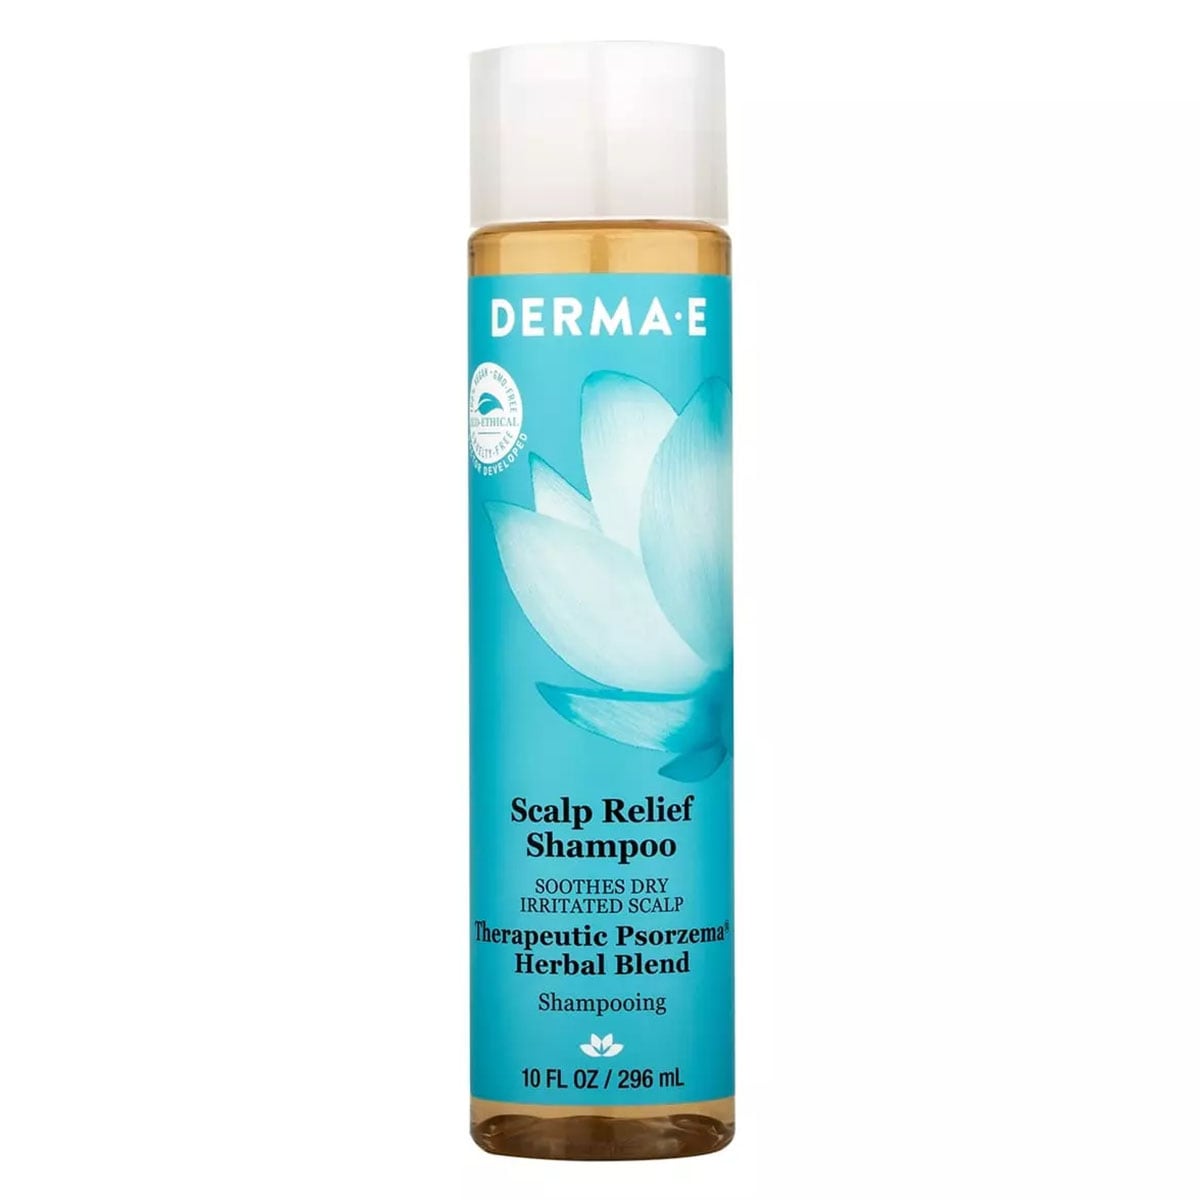 Derma E Scalp Relief Shampoo 296ml